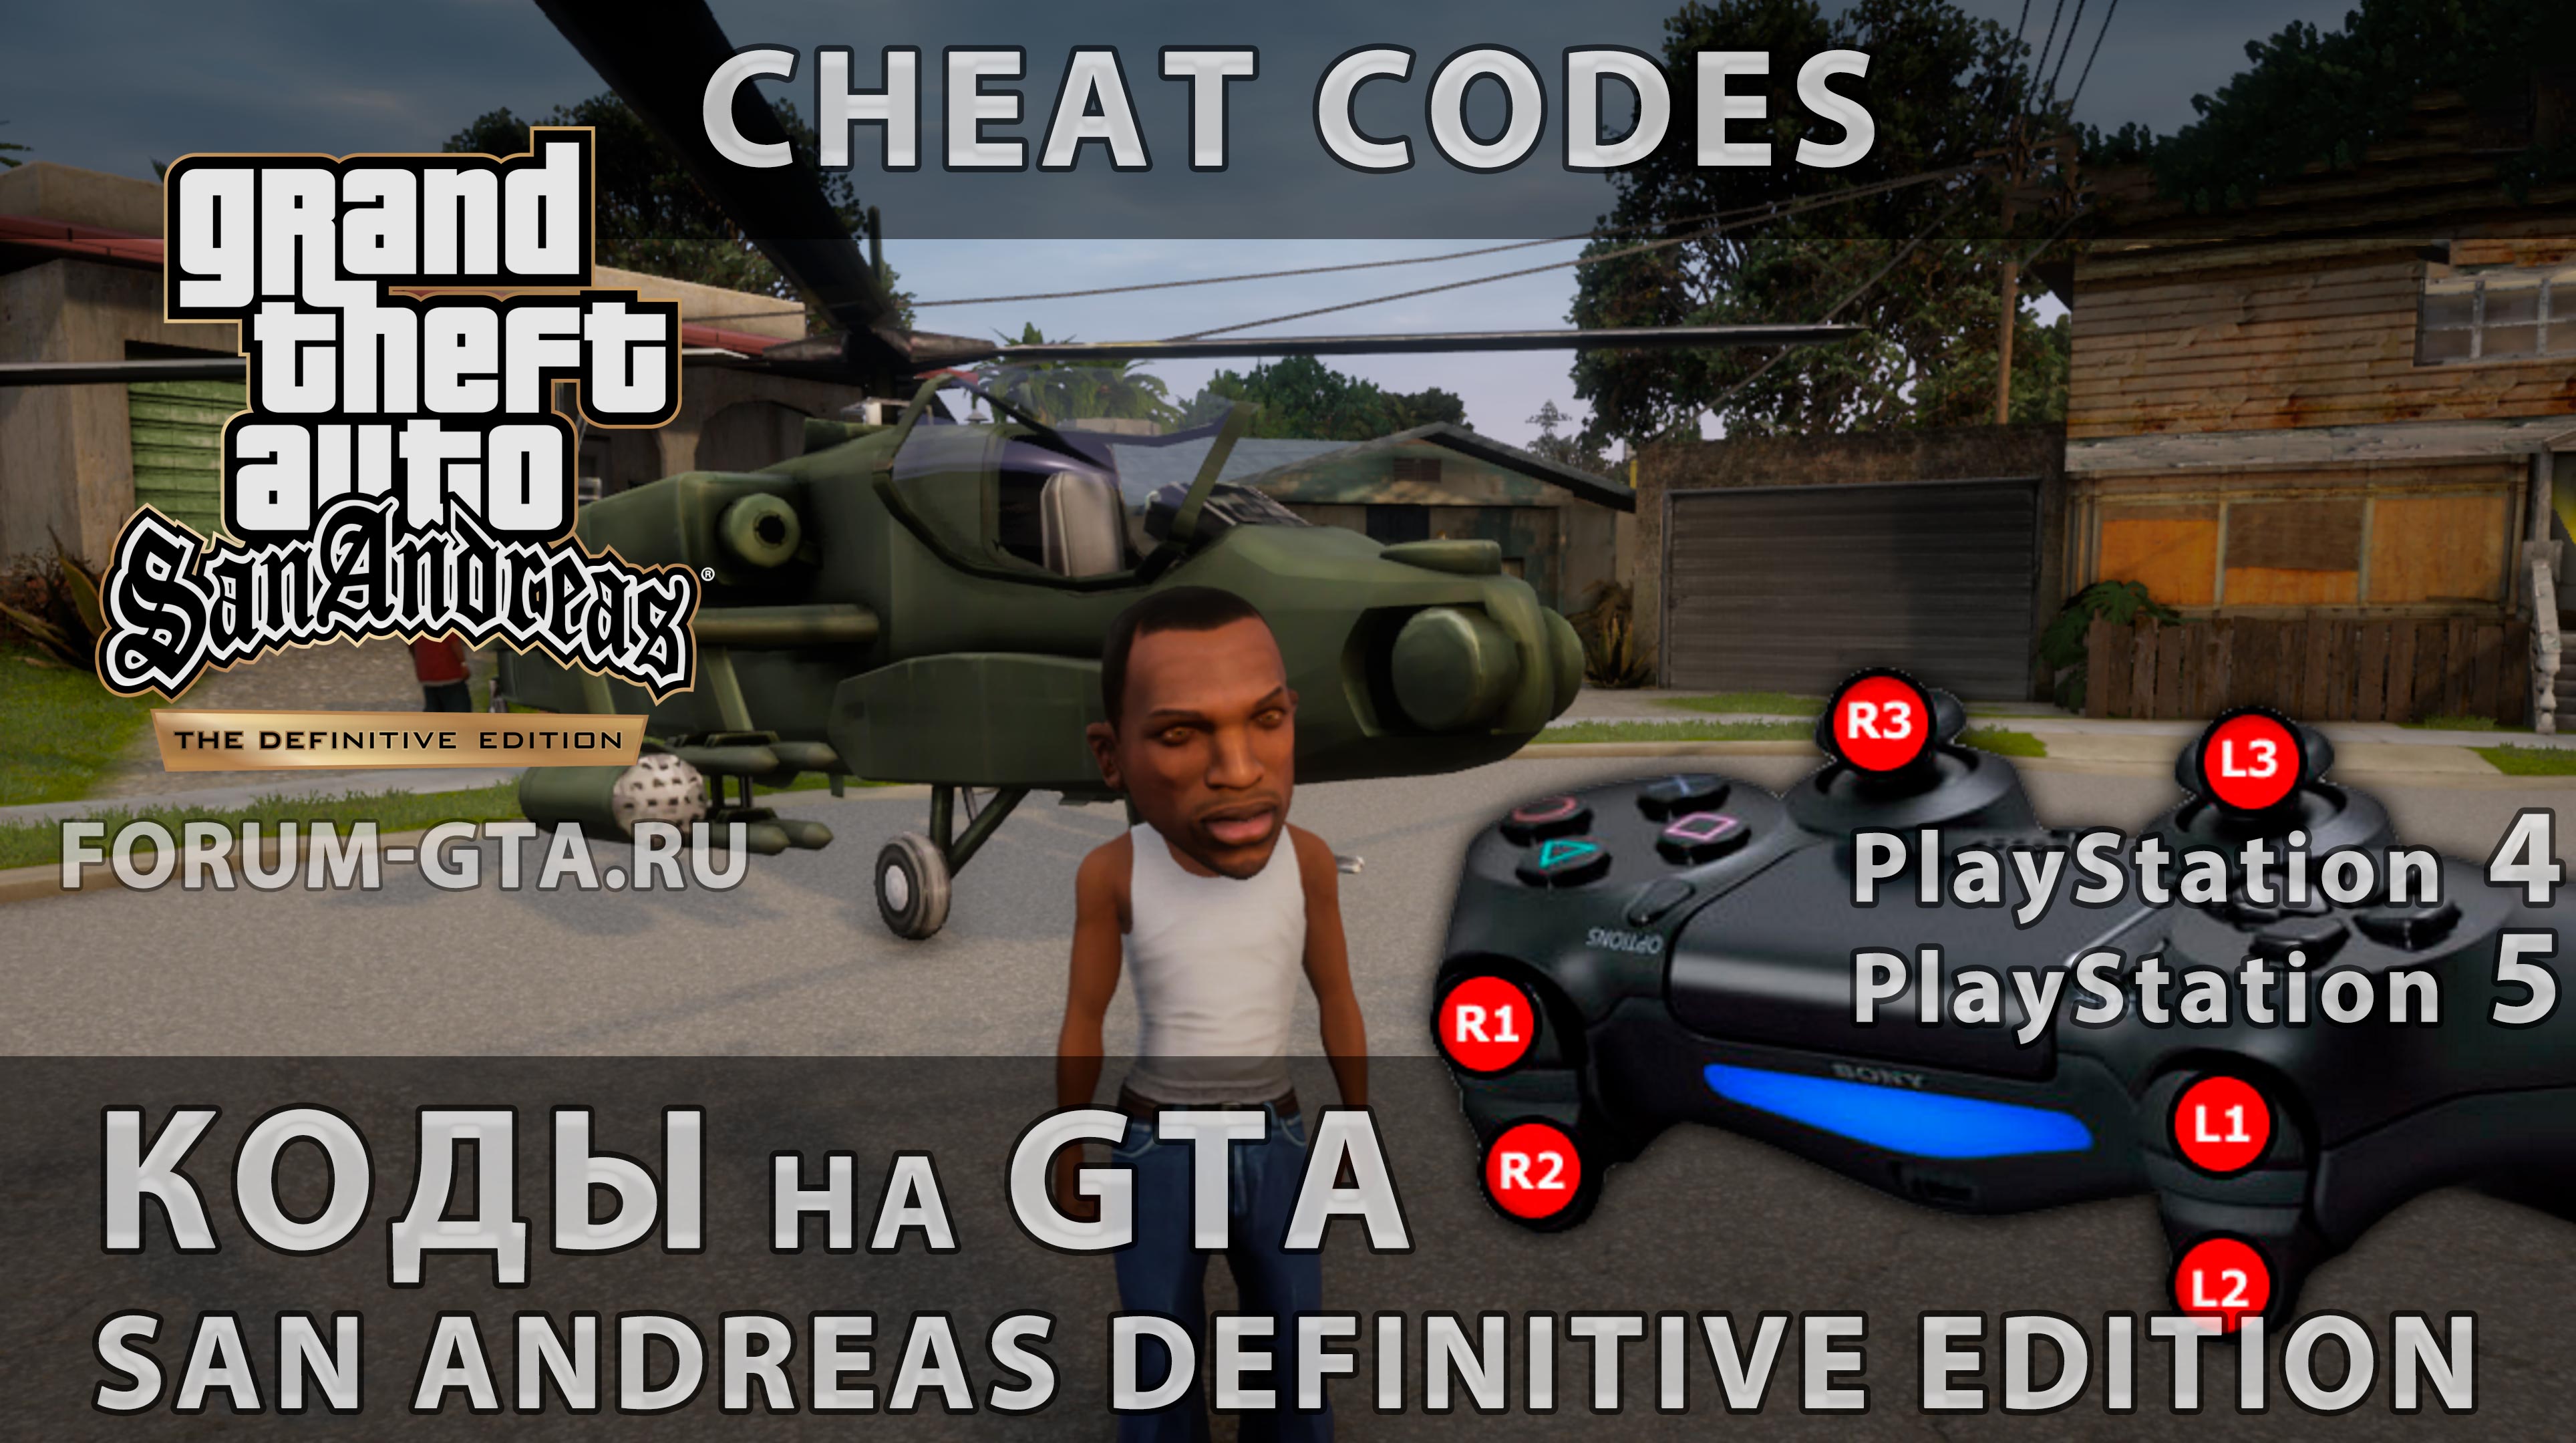 Коды на GTA San Andreas Definitive Edition для PS4 и PS5 - Форум GTA